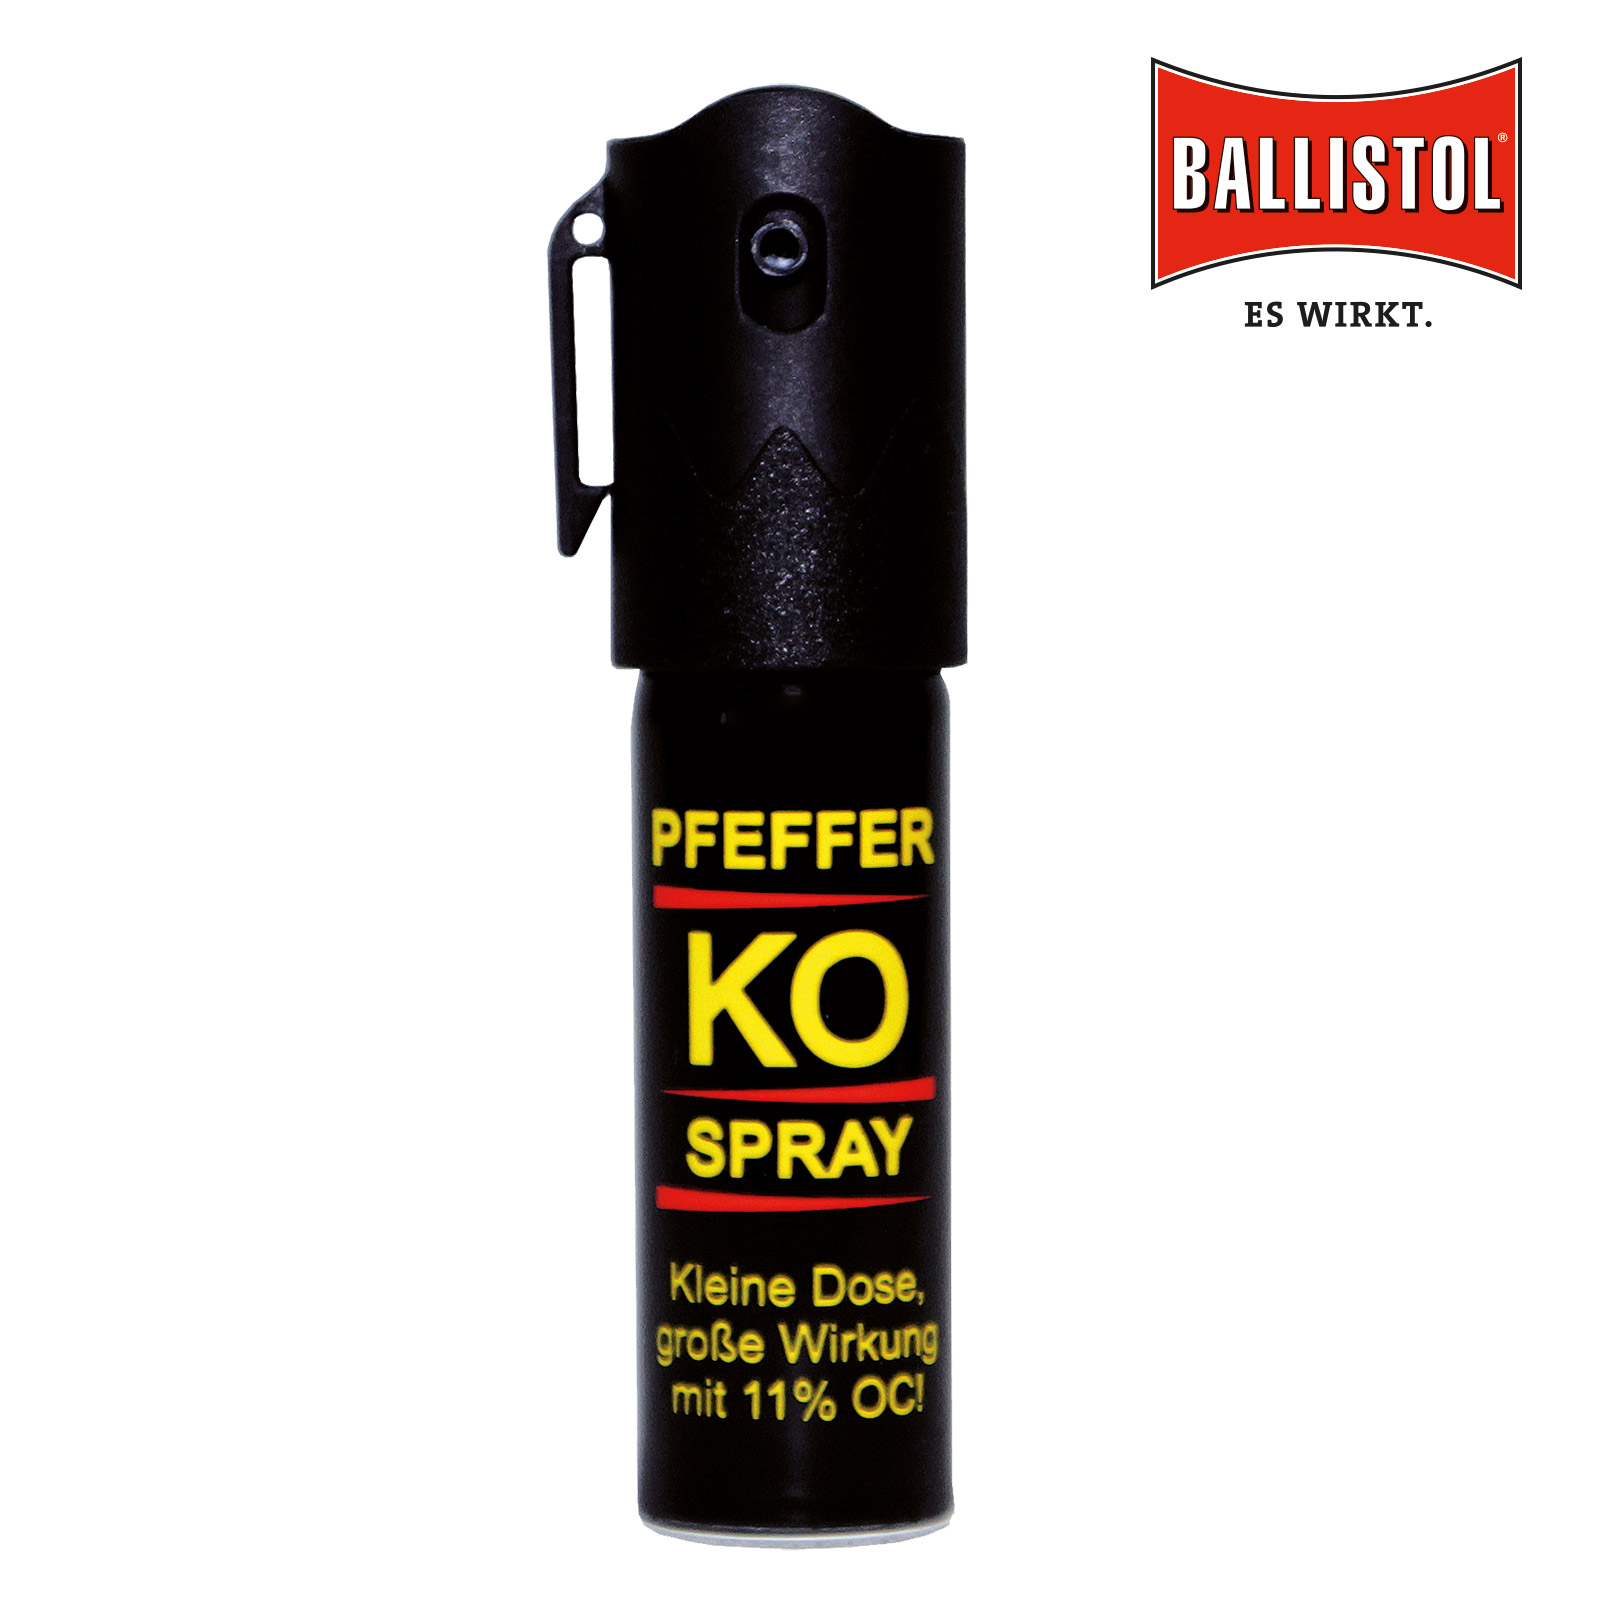 Ballistol Pfeffer-KO FOG Pfefferspray Tierabwehr KO Spray